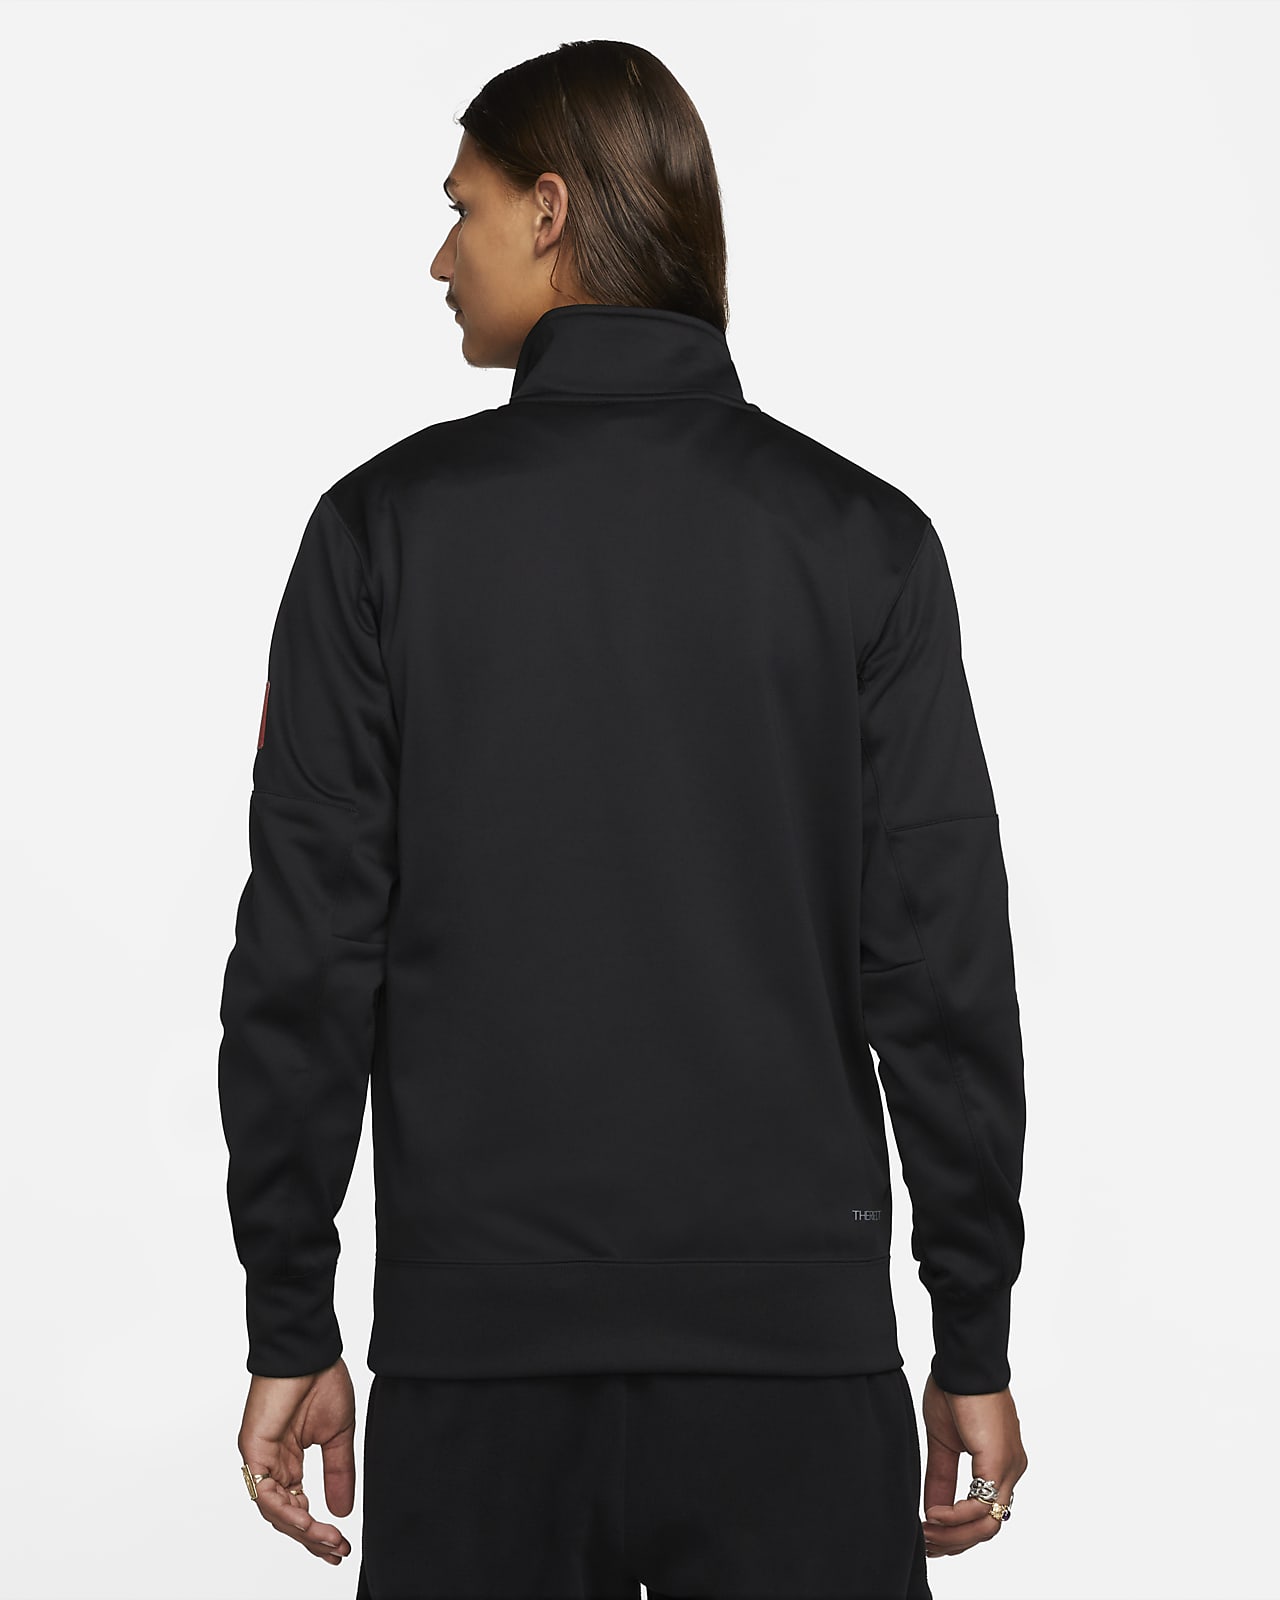 Nike Sportswear Air Max Men's 1/4-Zip Jacket. LU